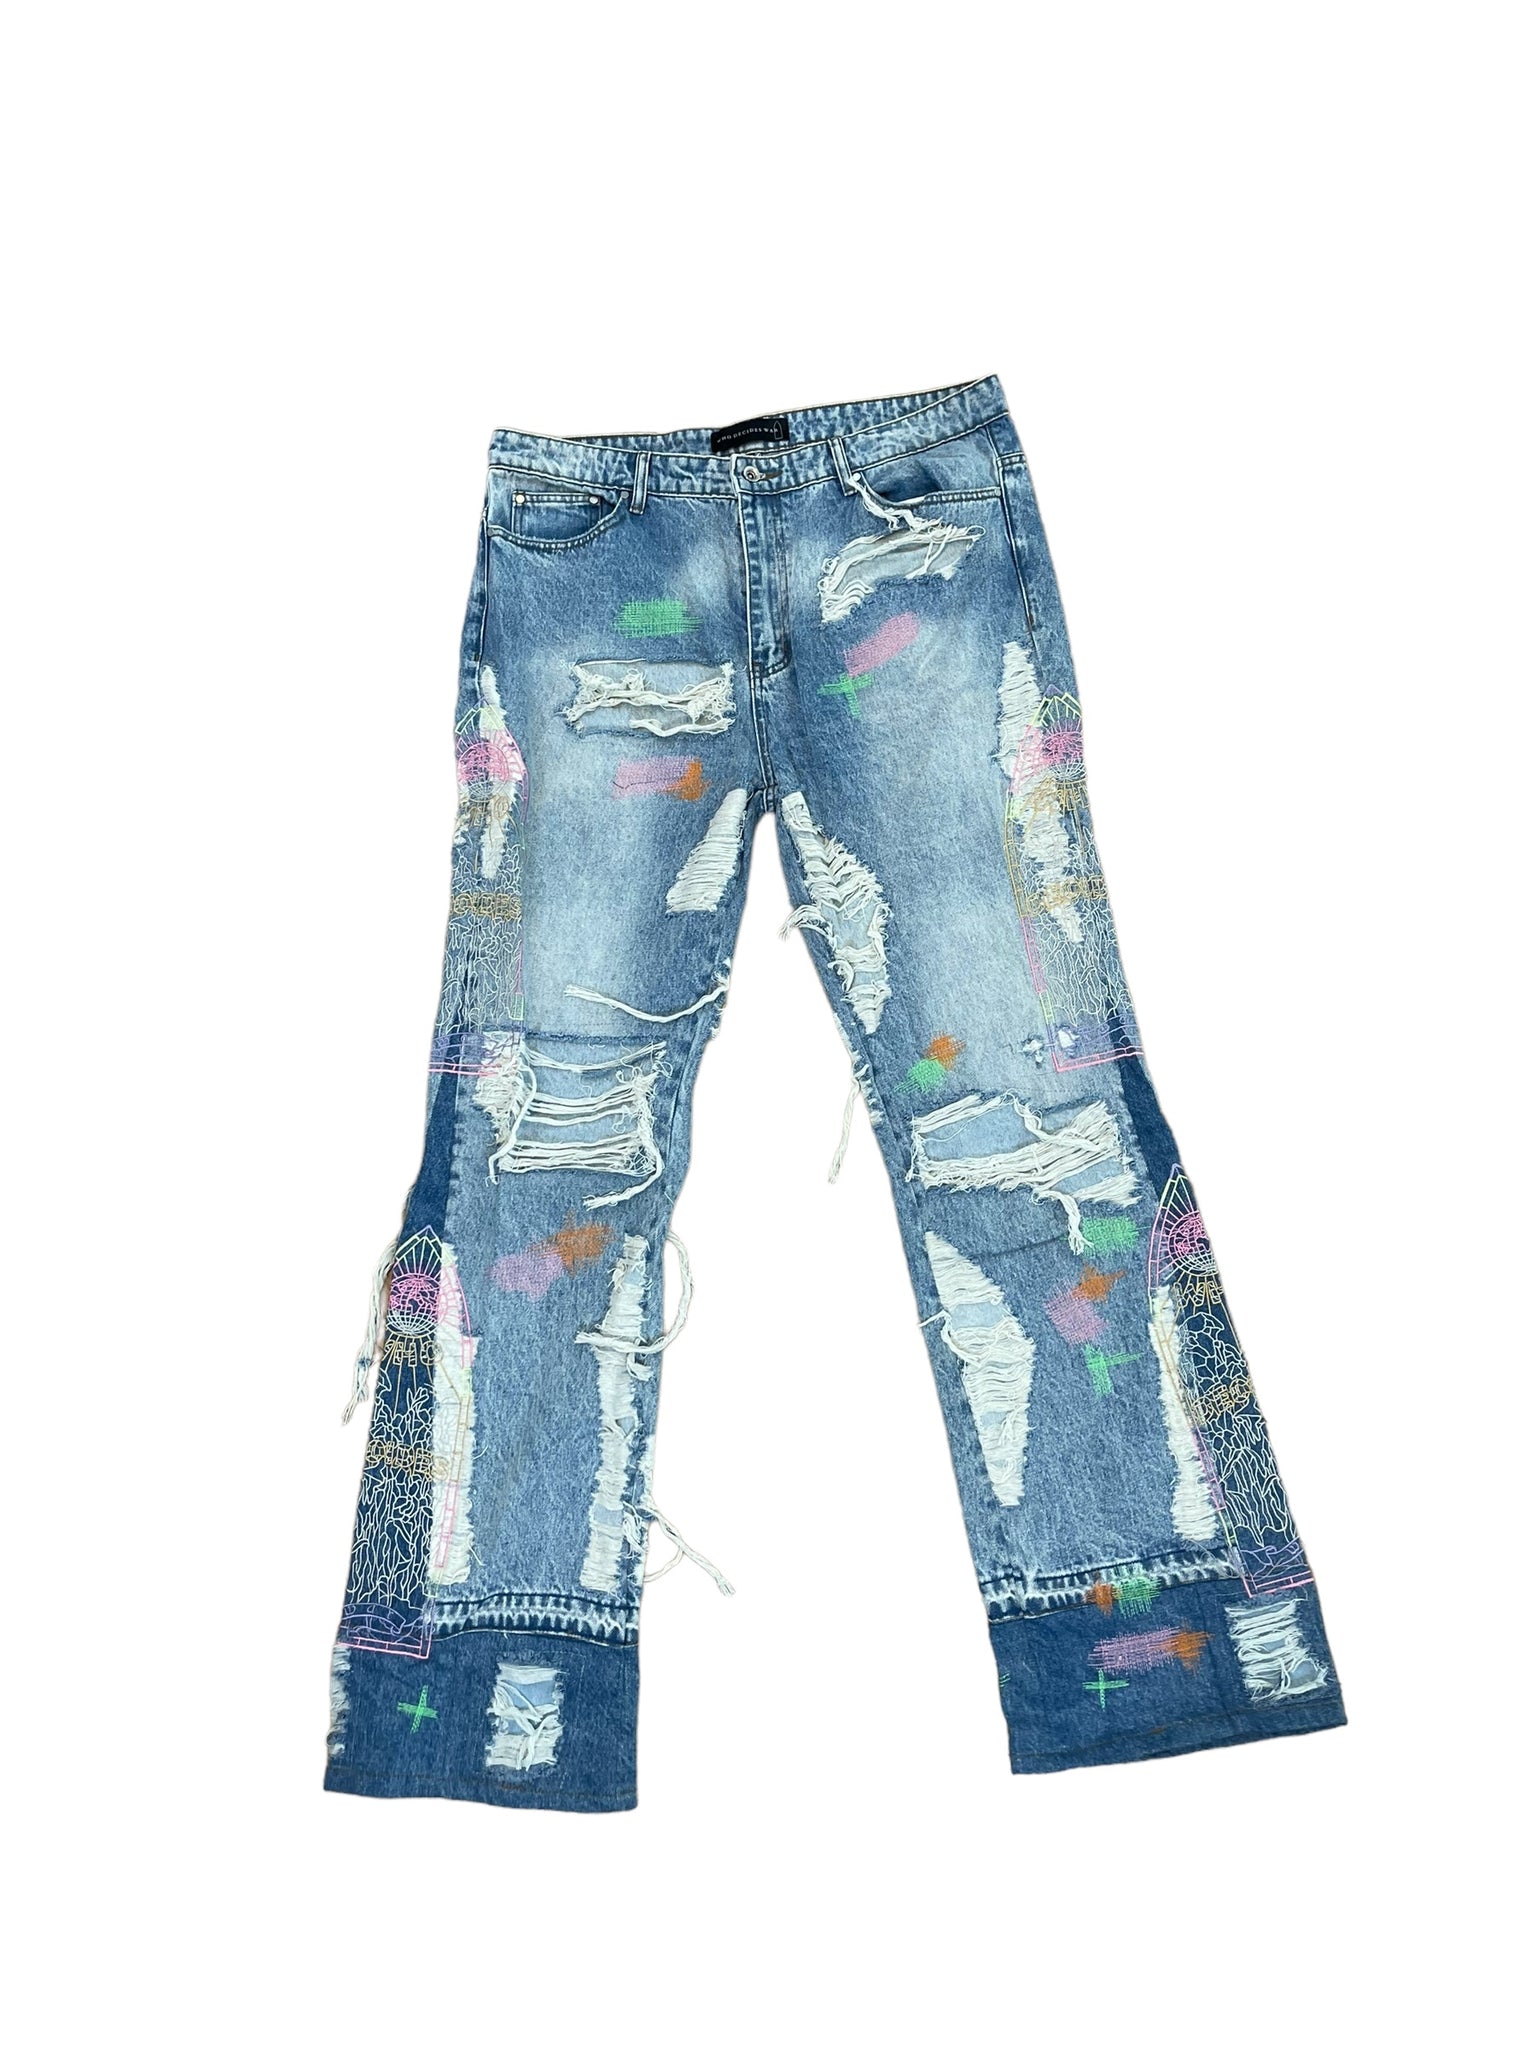 Who Decides War Technicolor Embroidery Denim Jeans "Lightwash"